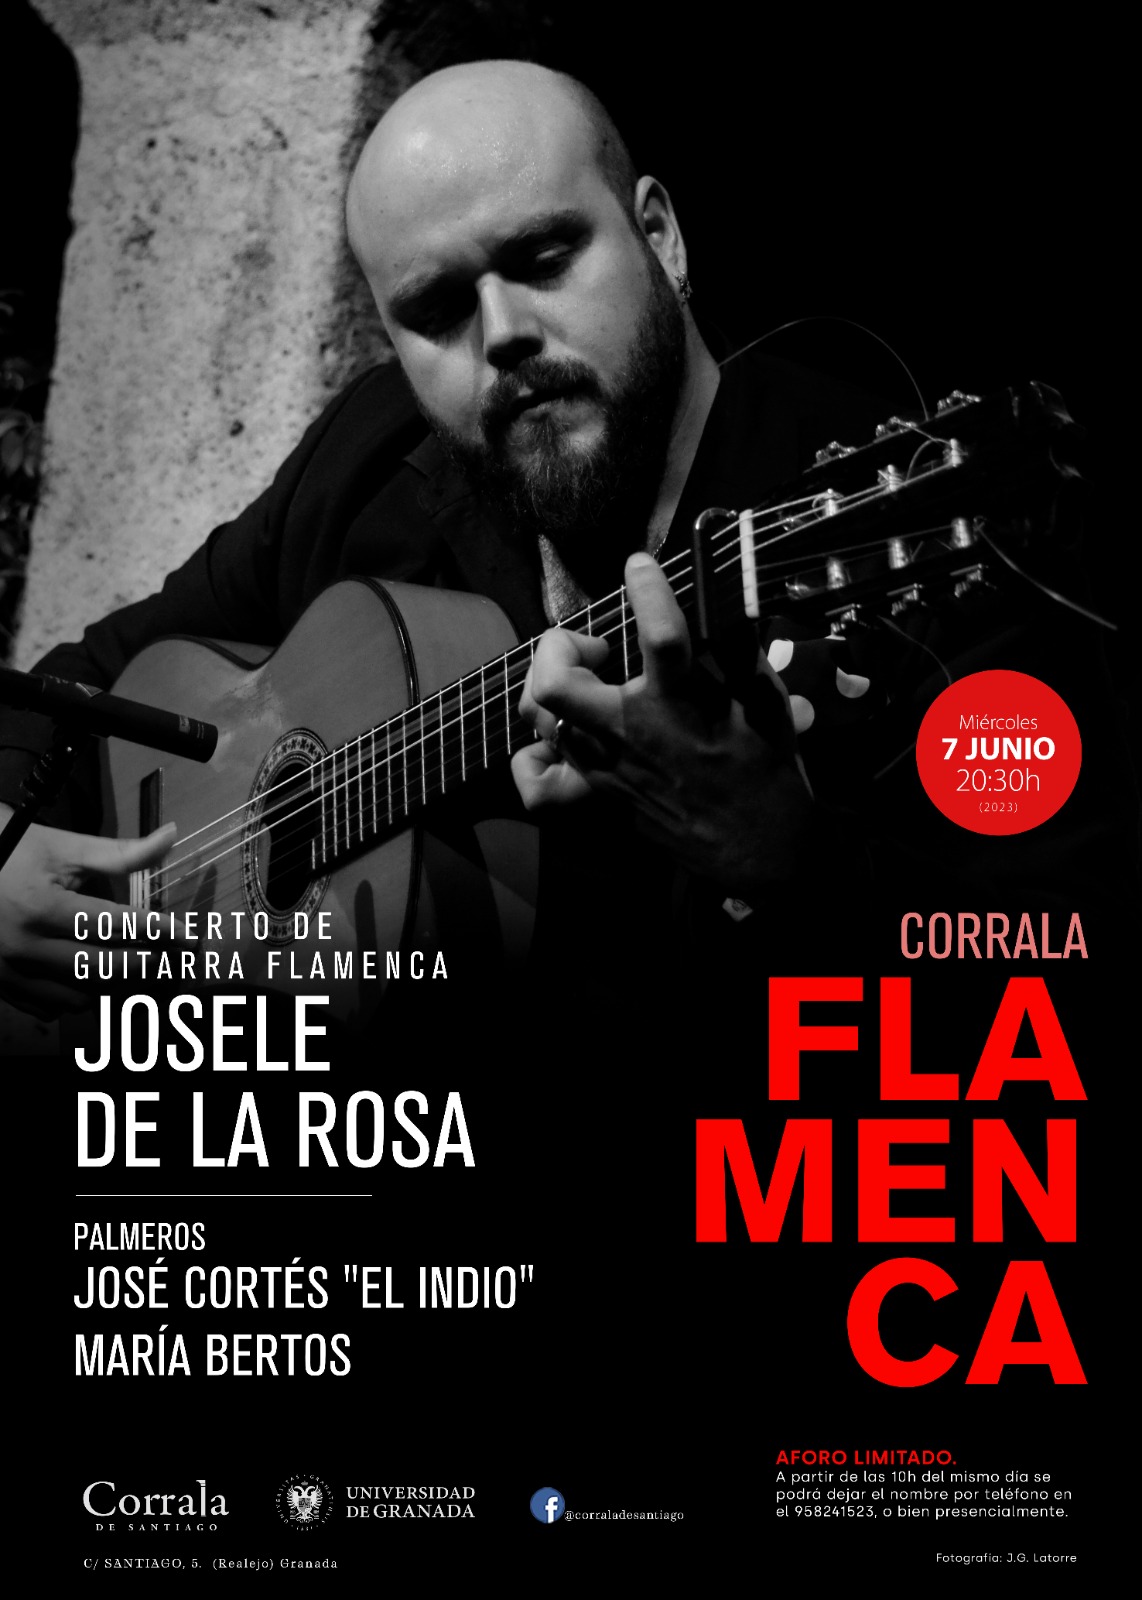 CORRALA FLAMENCA | Guitarra flamenca en concierto | Josele de la Rosa | 7-6